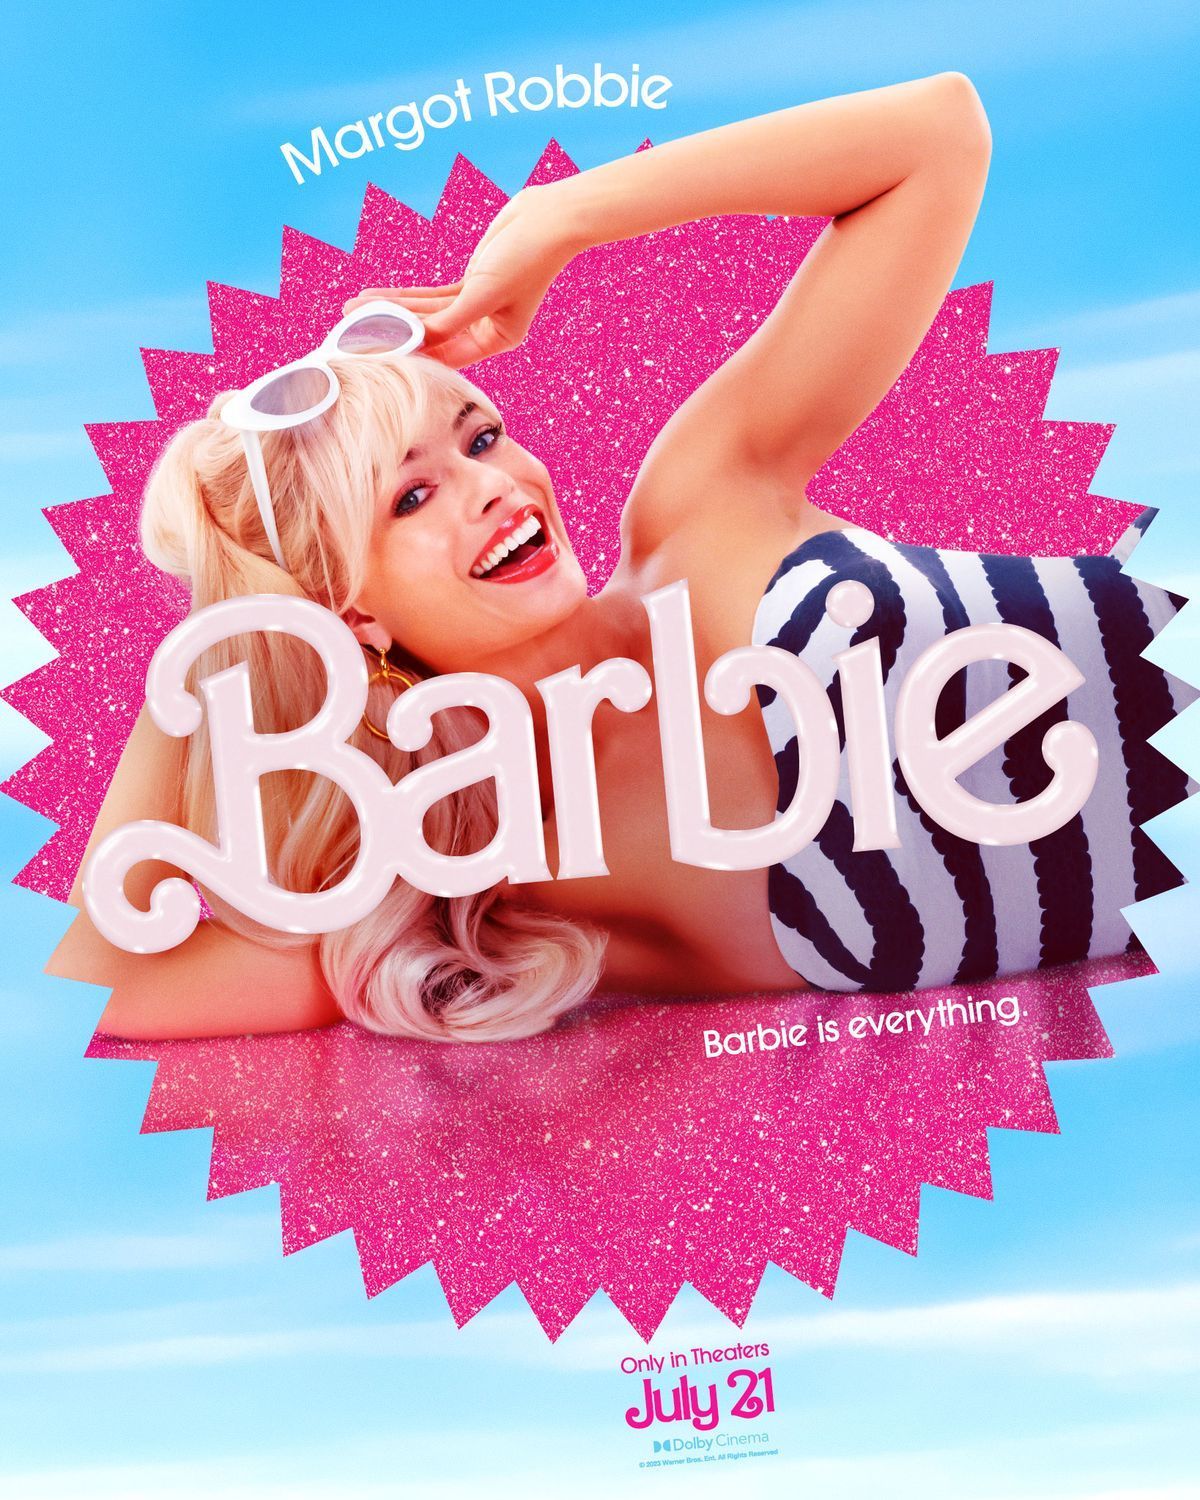 Barbie Controversy